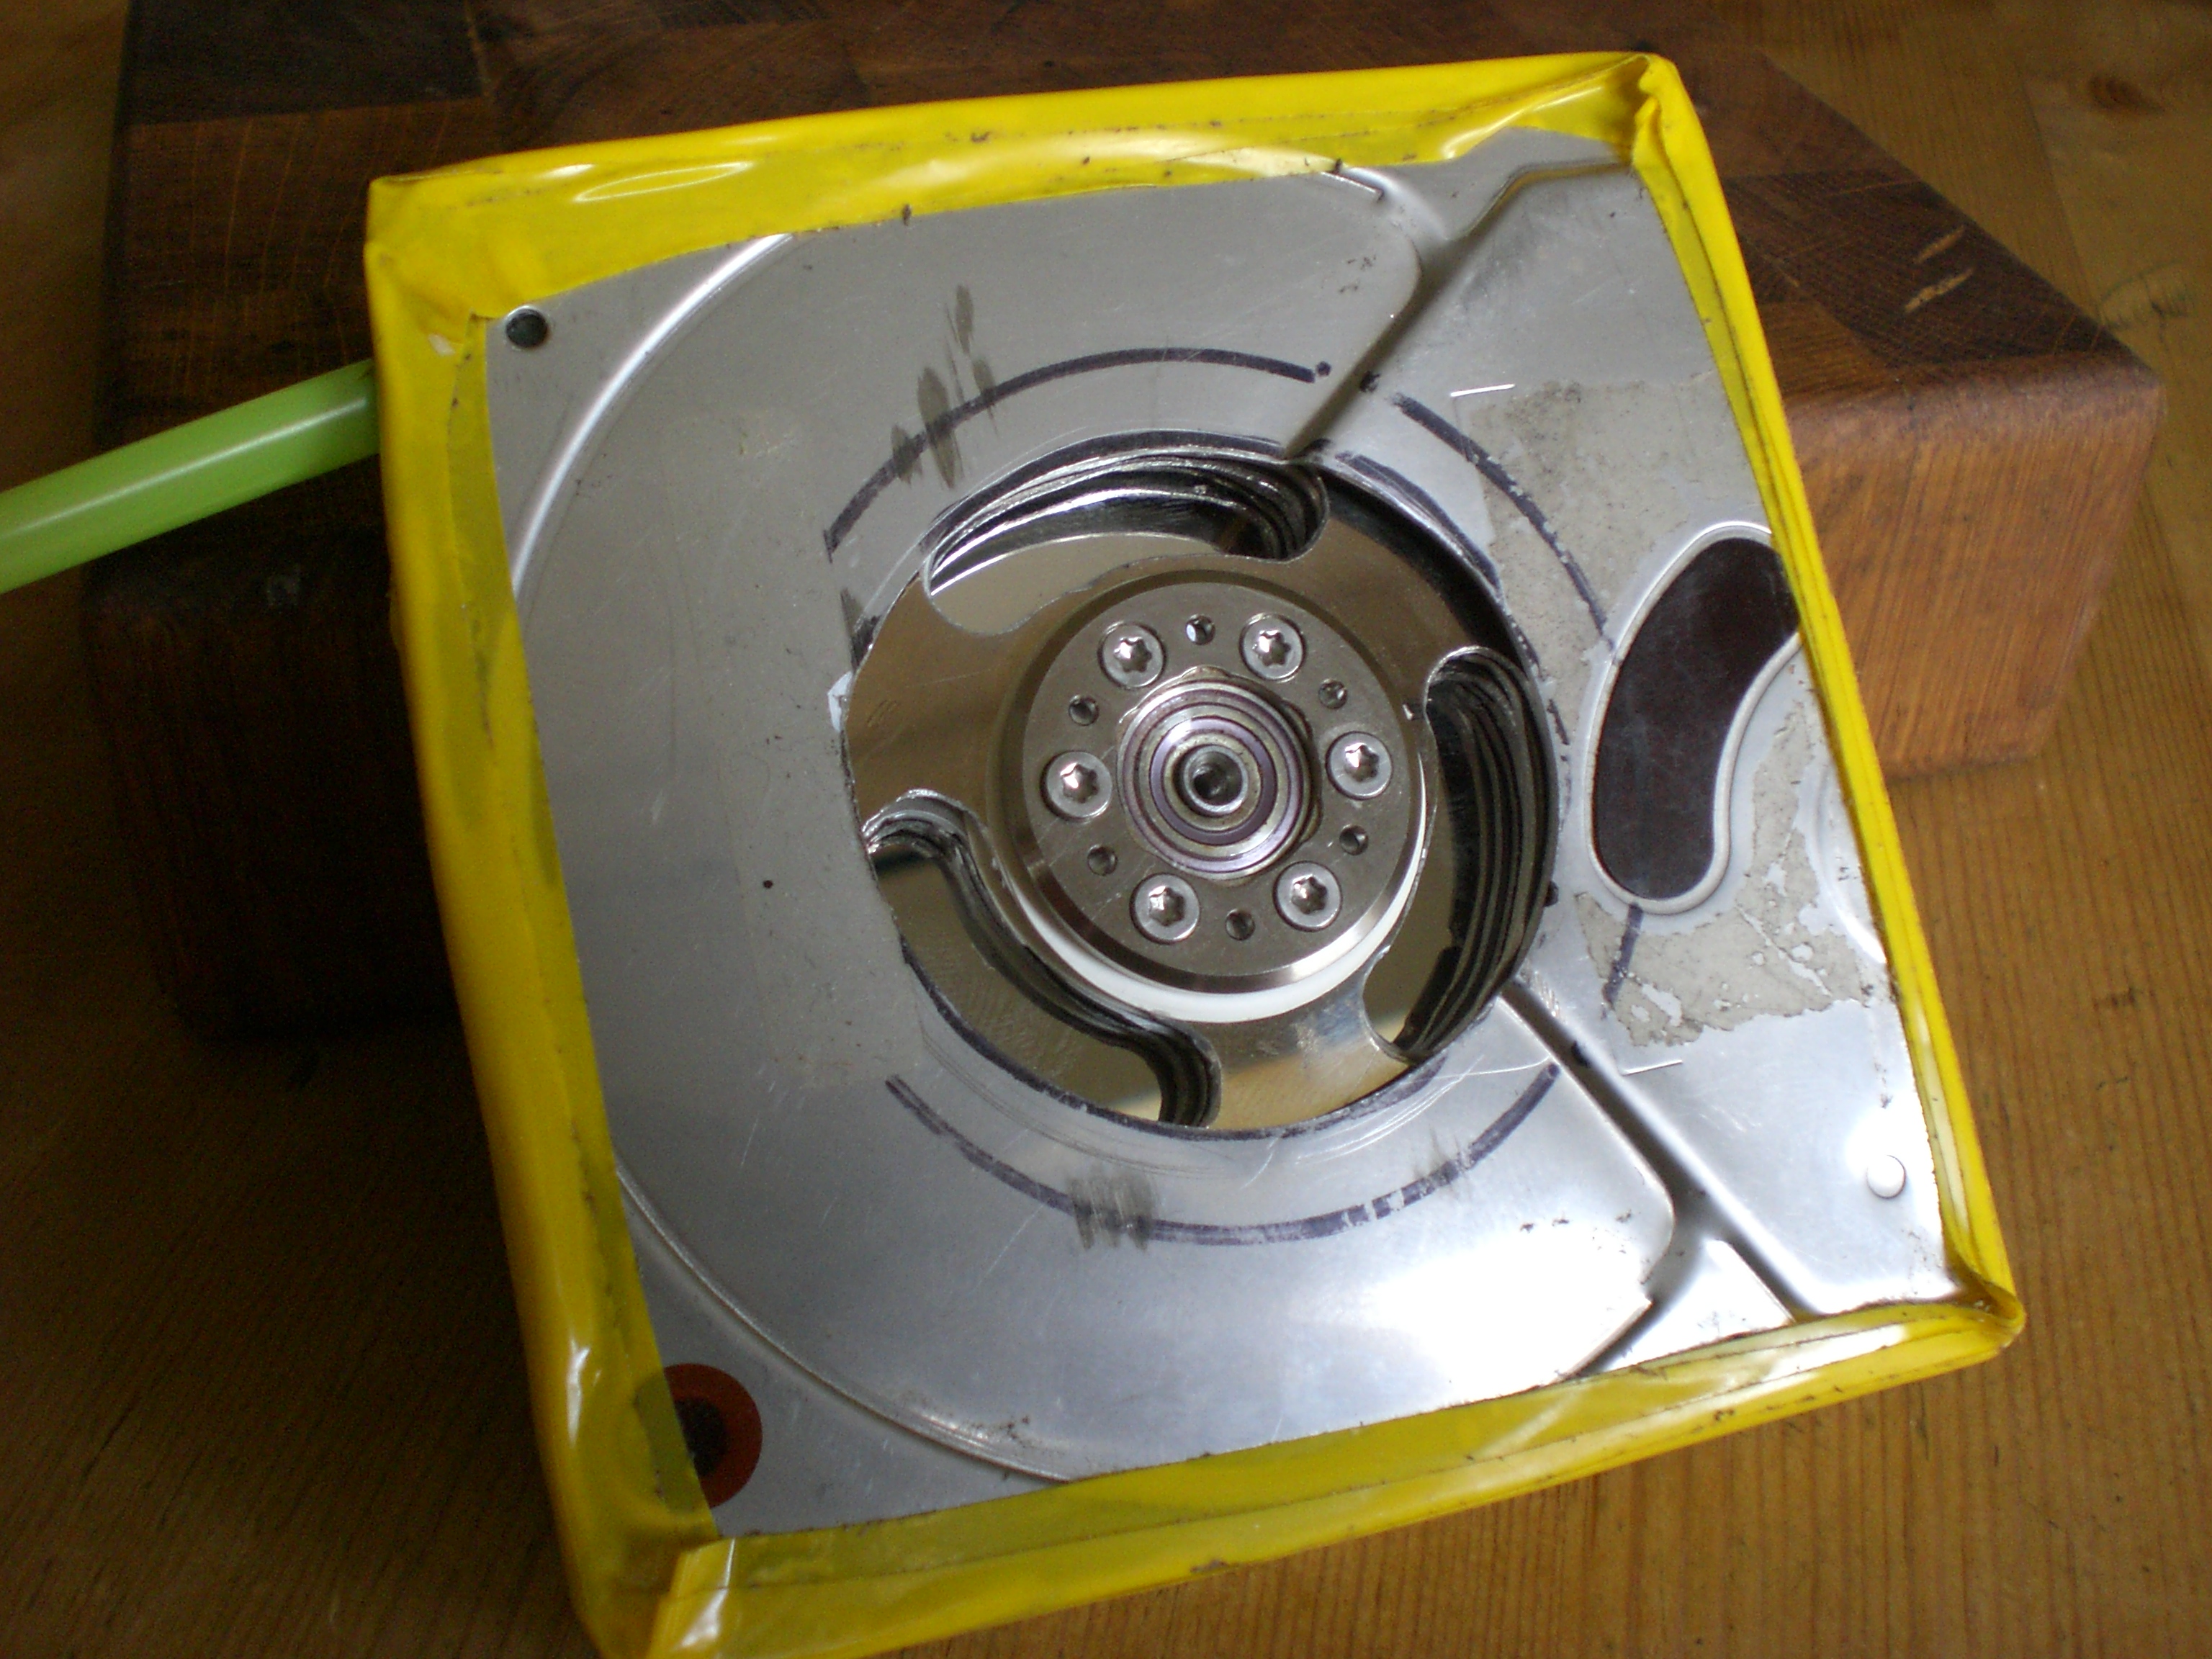 Tesla turbine from old hard drives and minimal tools